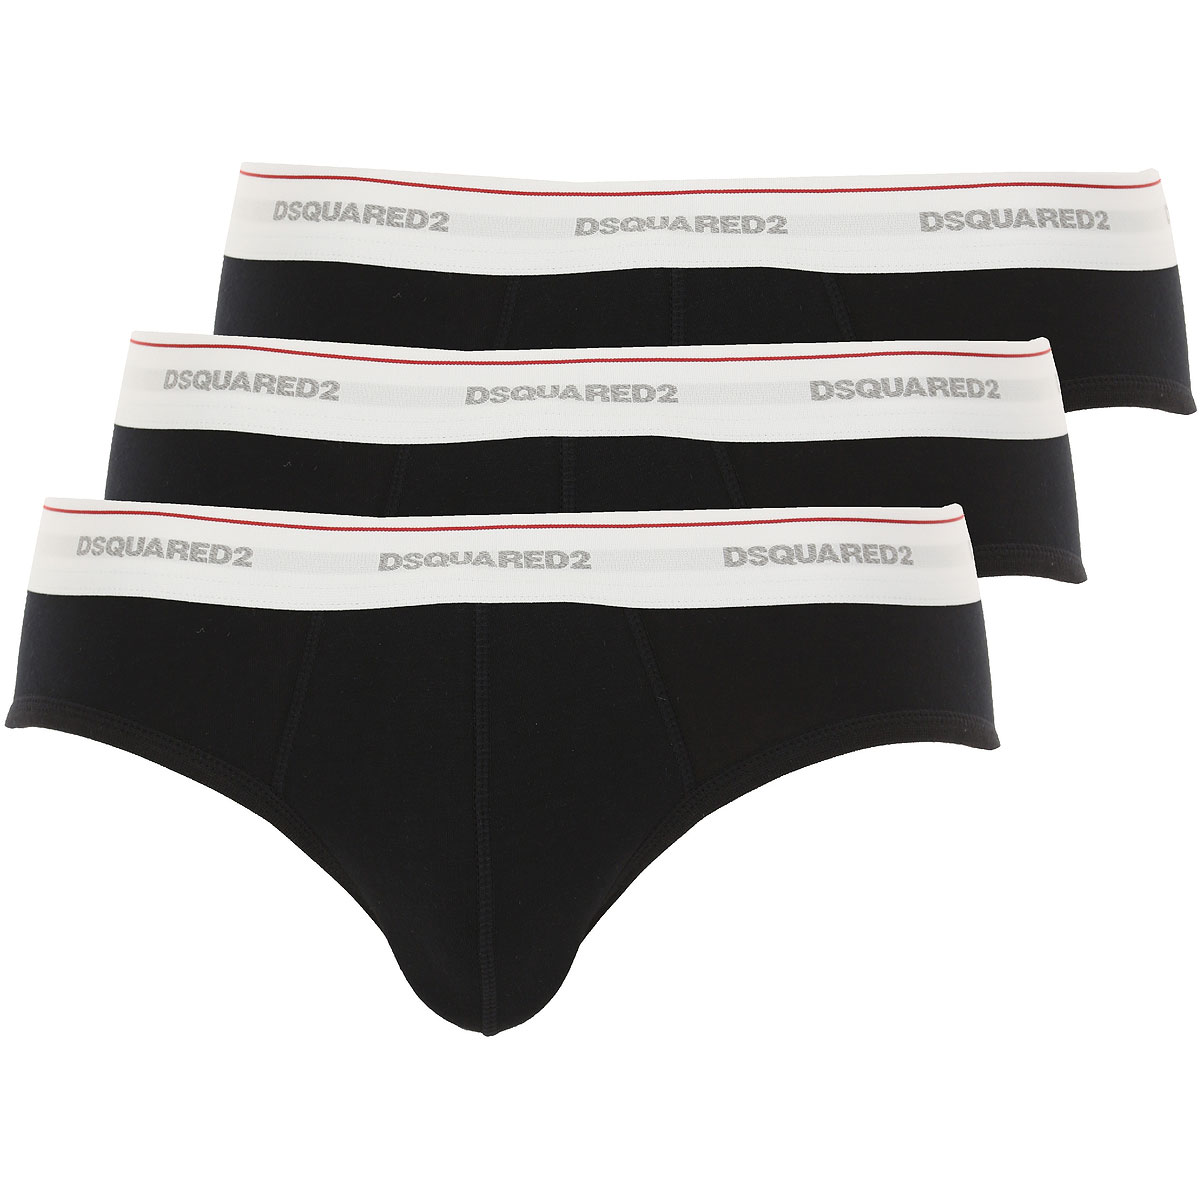 Mens Underwear Dsquared2, Style code: dcx610040-200-